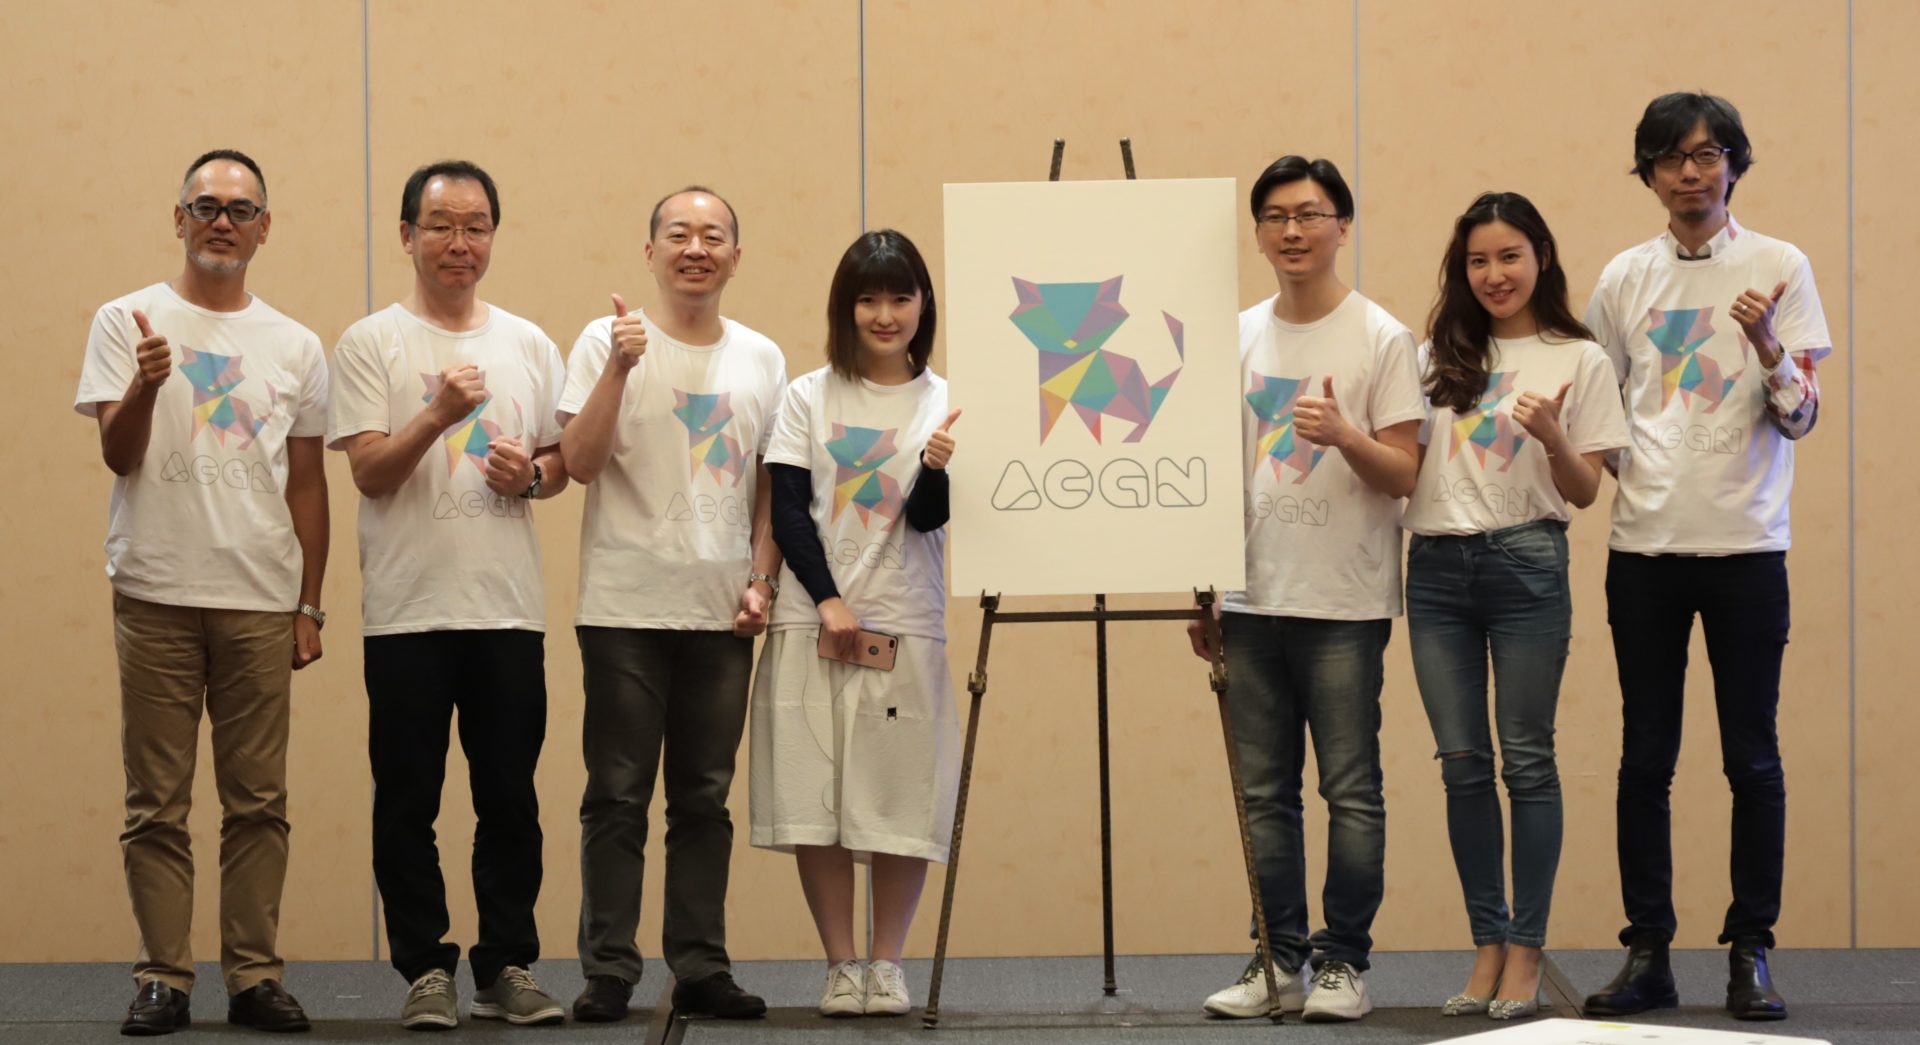 ACG Network เผย Digital Content ผนวกเทคโนโลยีบล็อกเชนเป็นครั้งแรกบนอุตสาหกรรมแอนิเมชั่นและเกมจากญี่ปุ่น